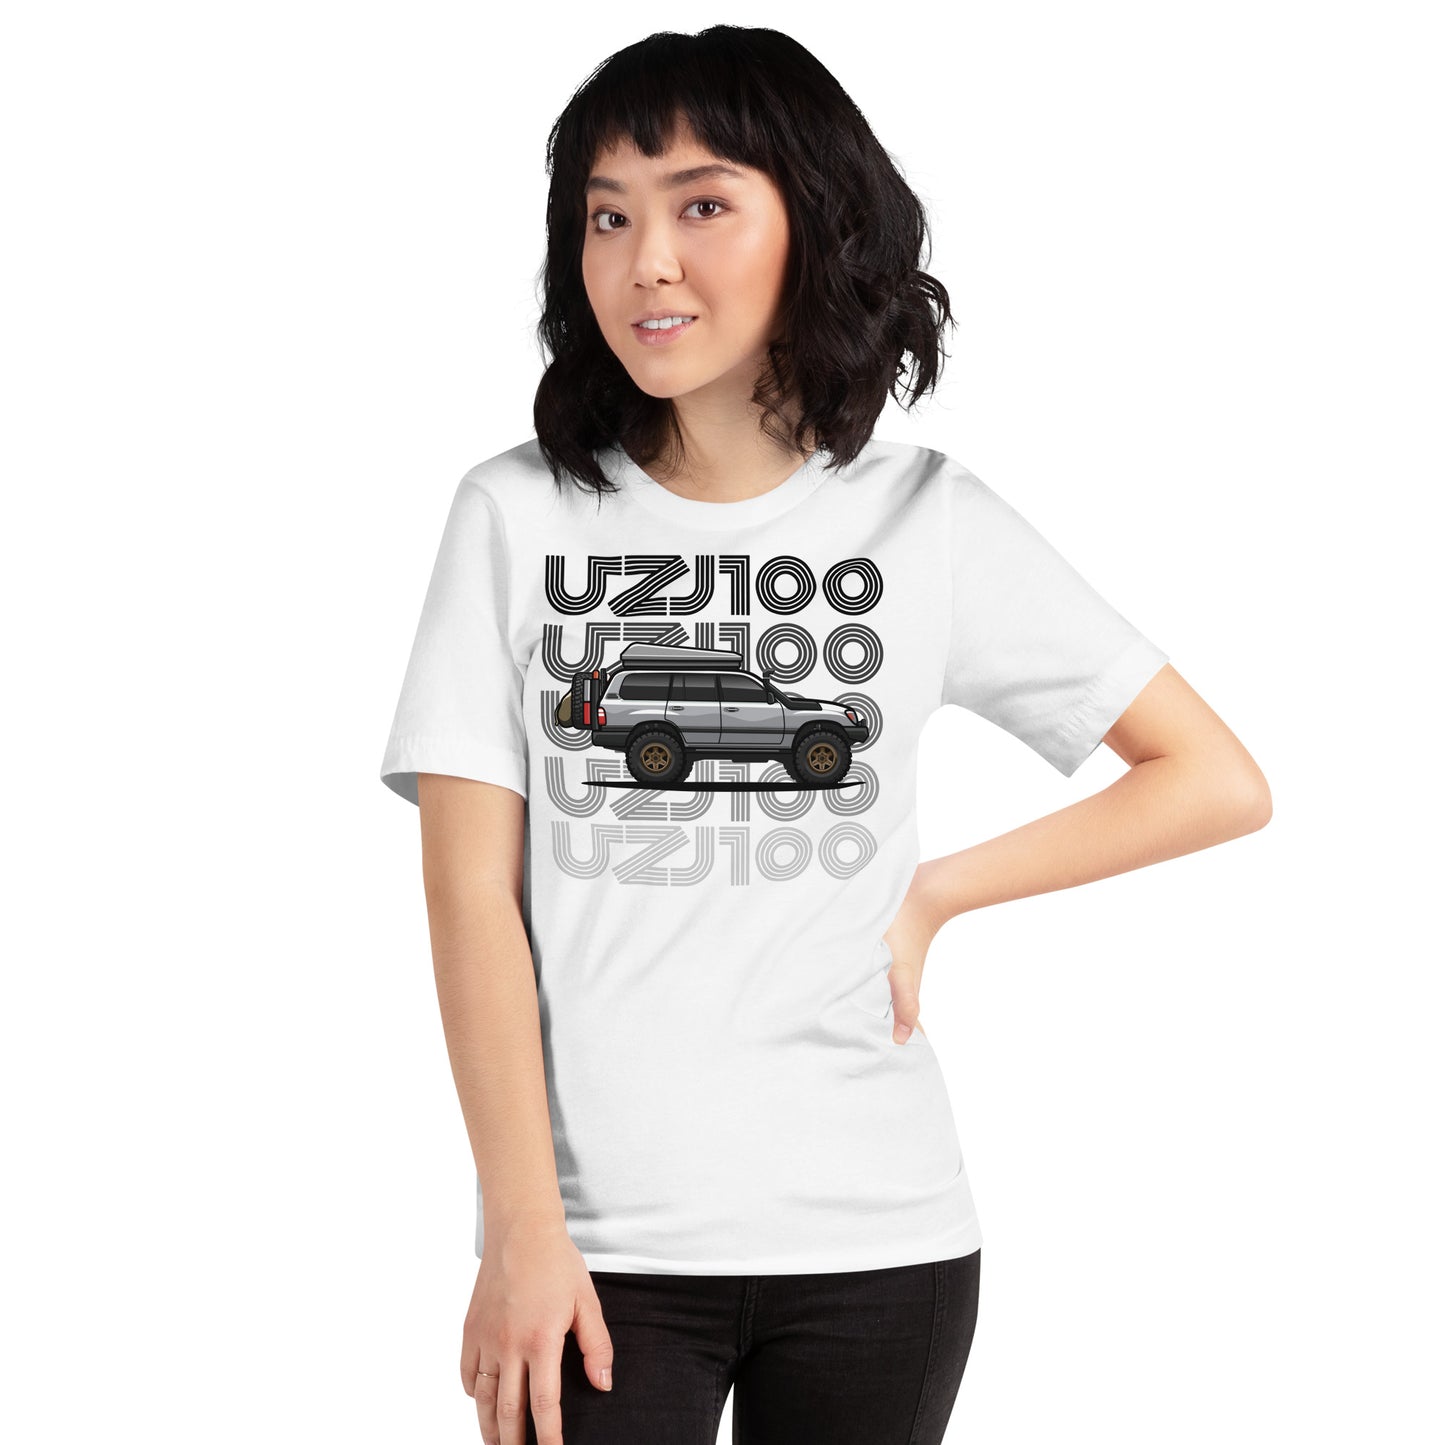 UZJ100 - Tshirt - Artists Collab Series 02 - Merch-Mkt